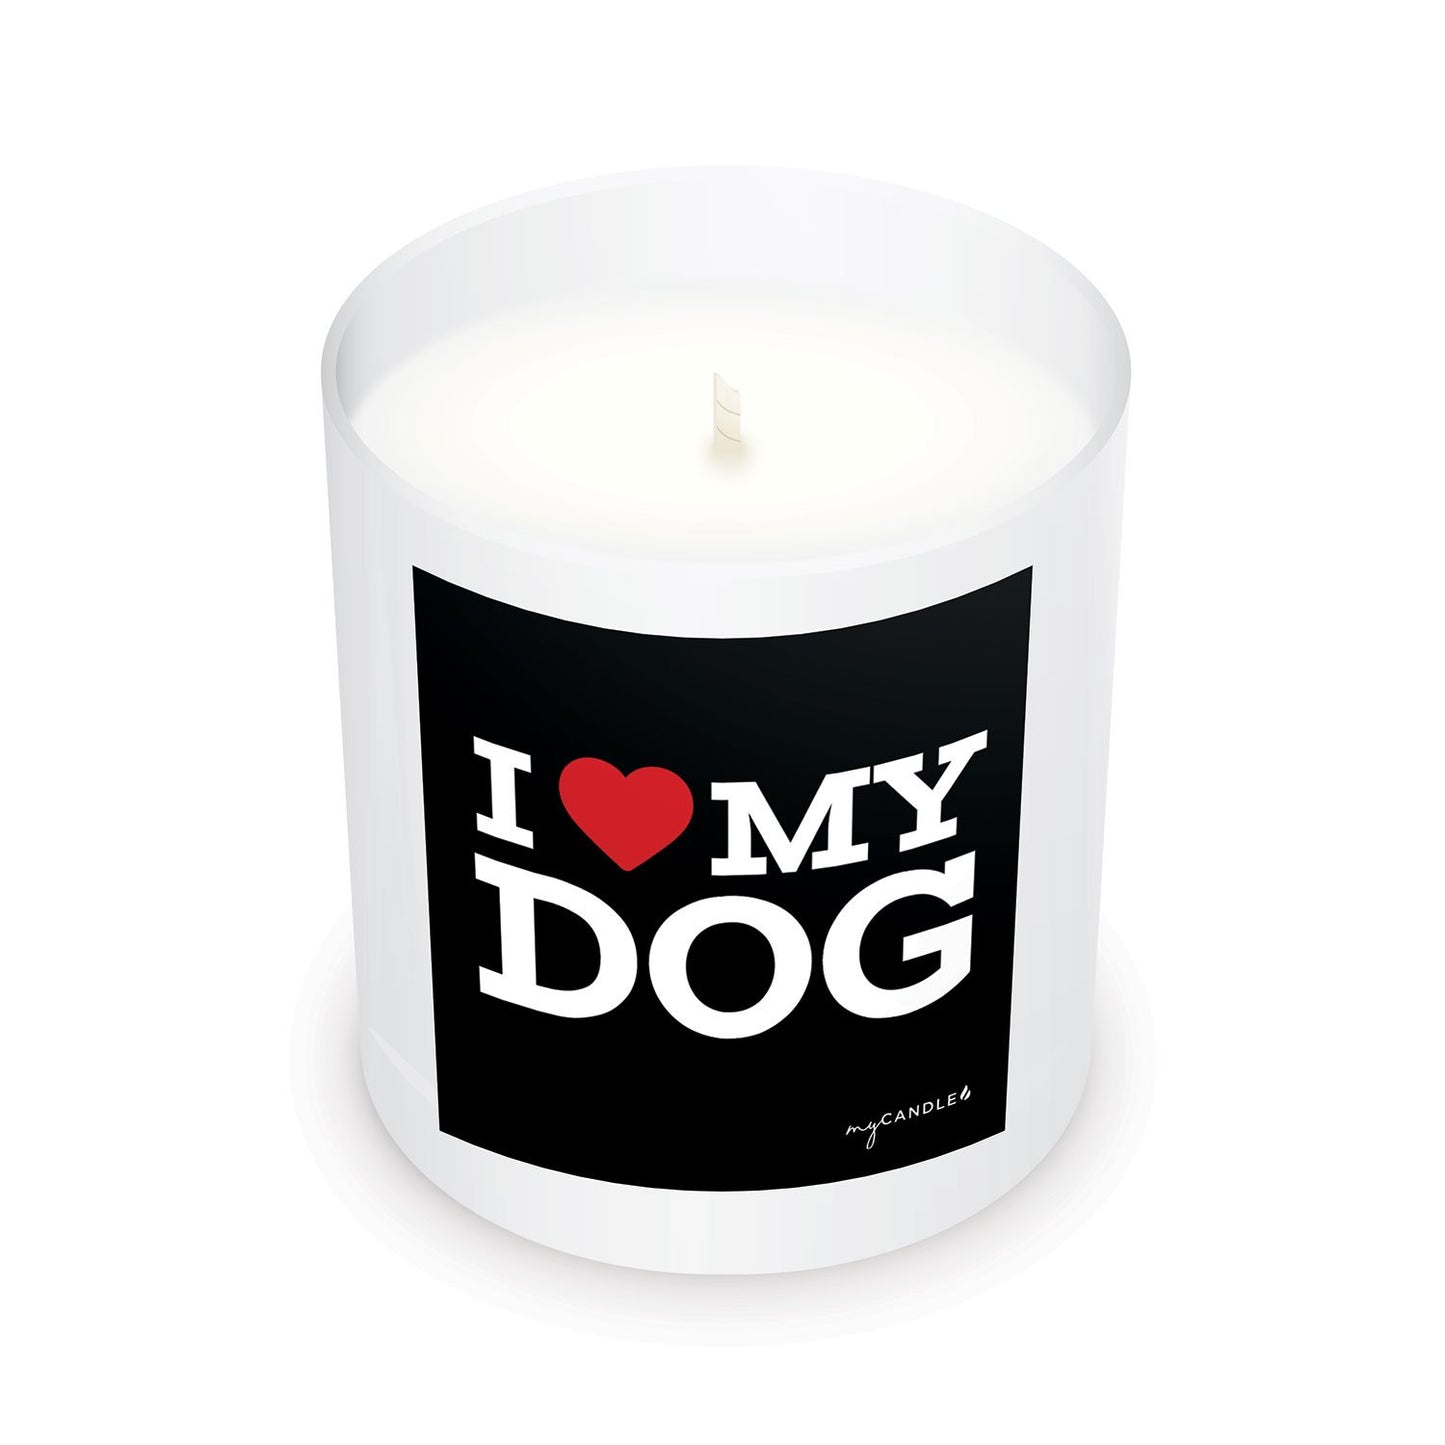 I Heart My Dog Candle